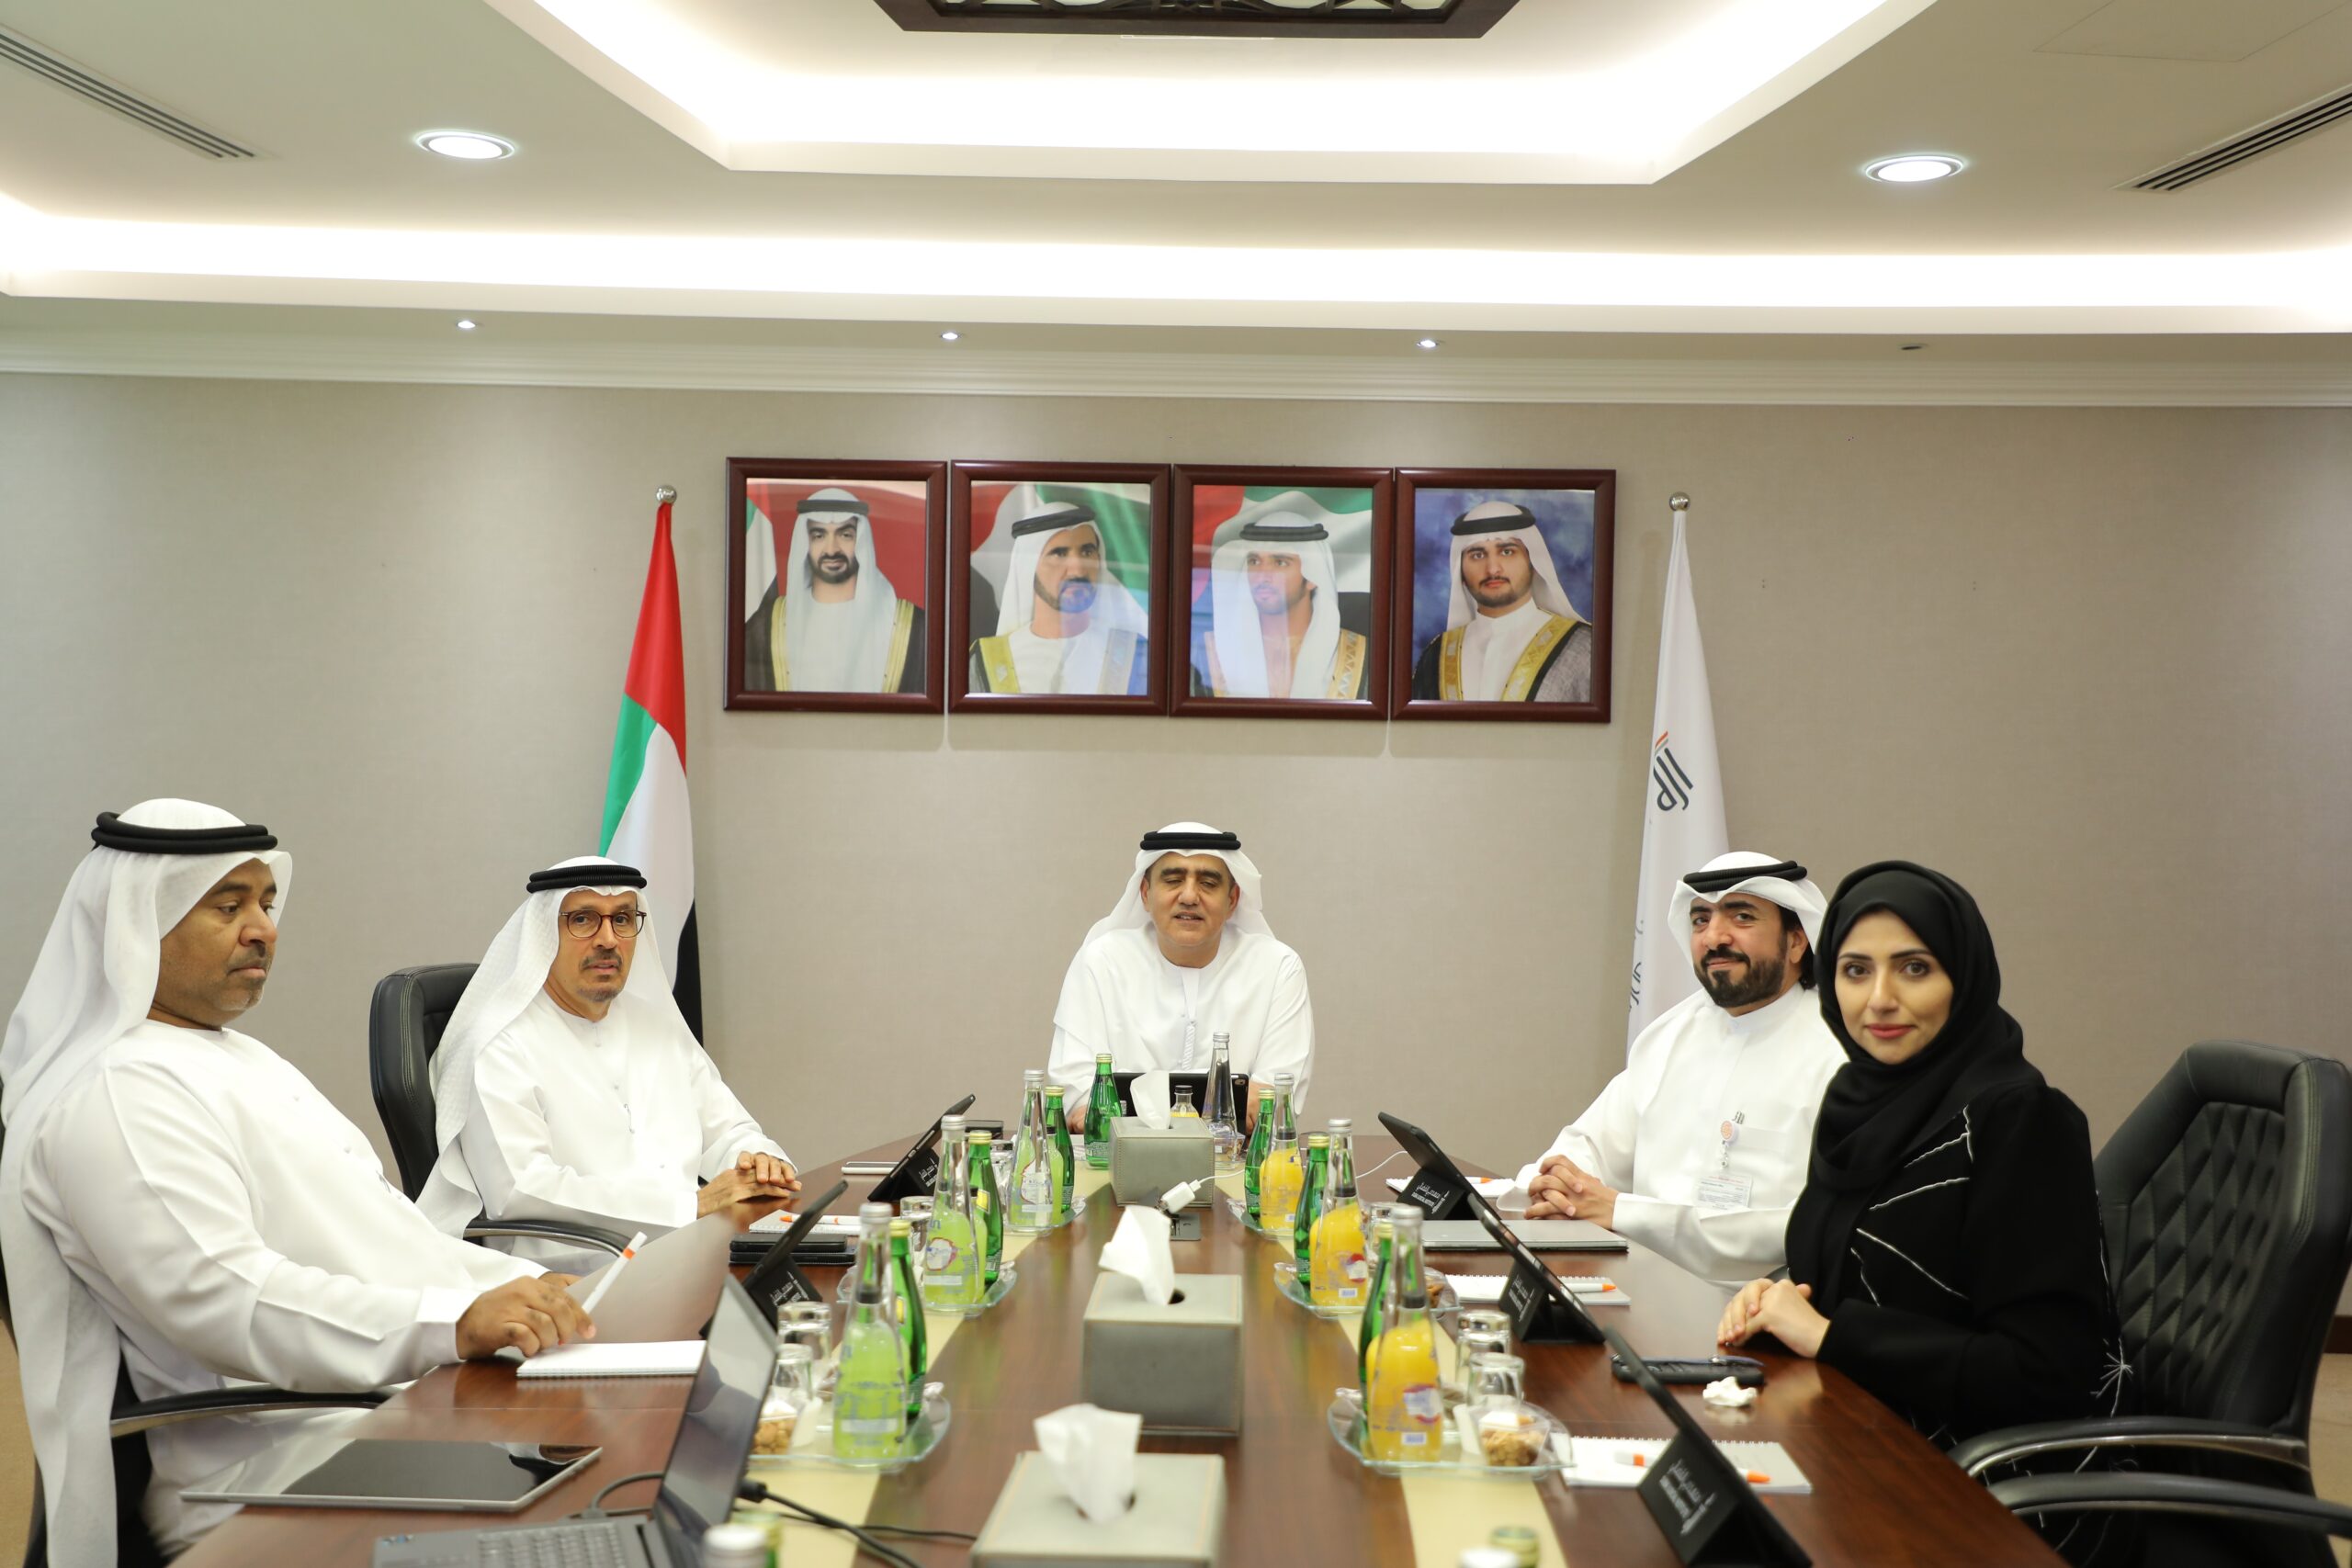 Board of Directors of the Dubai Judicial Institute scaled